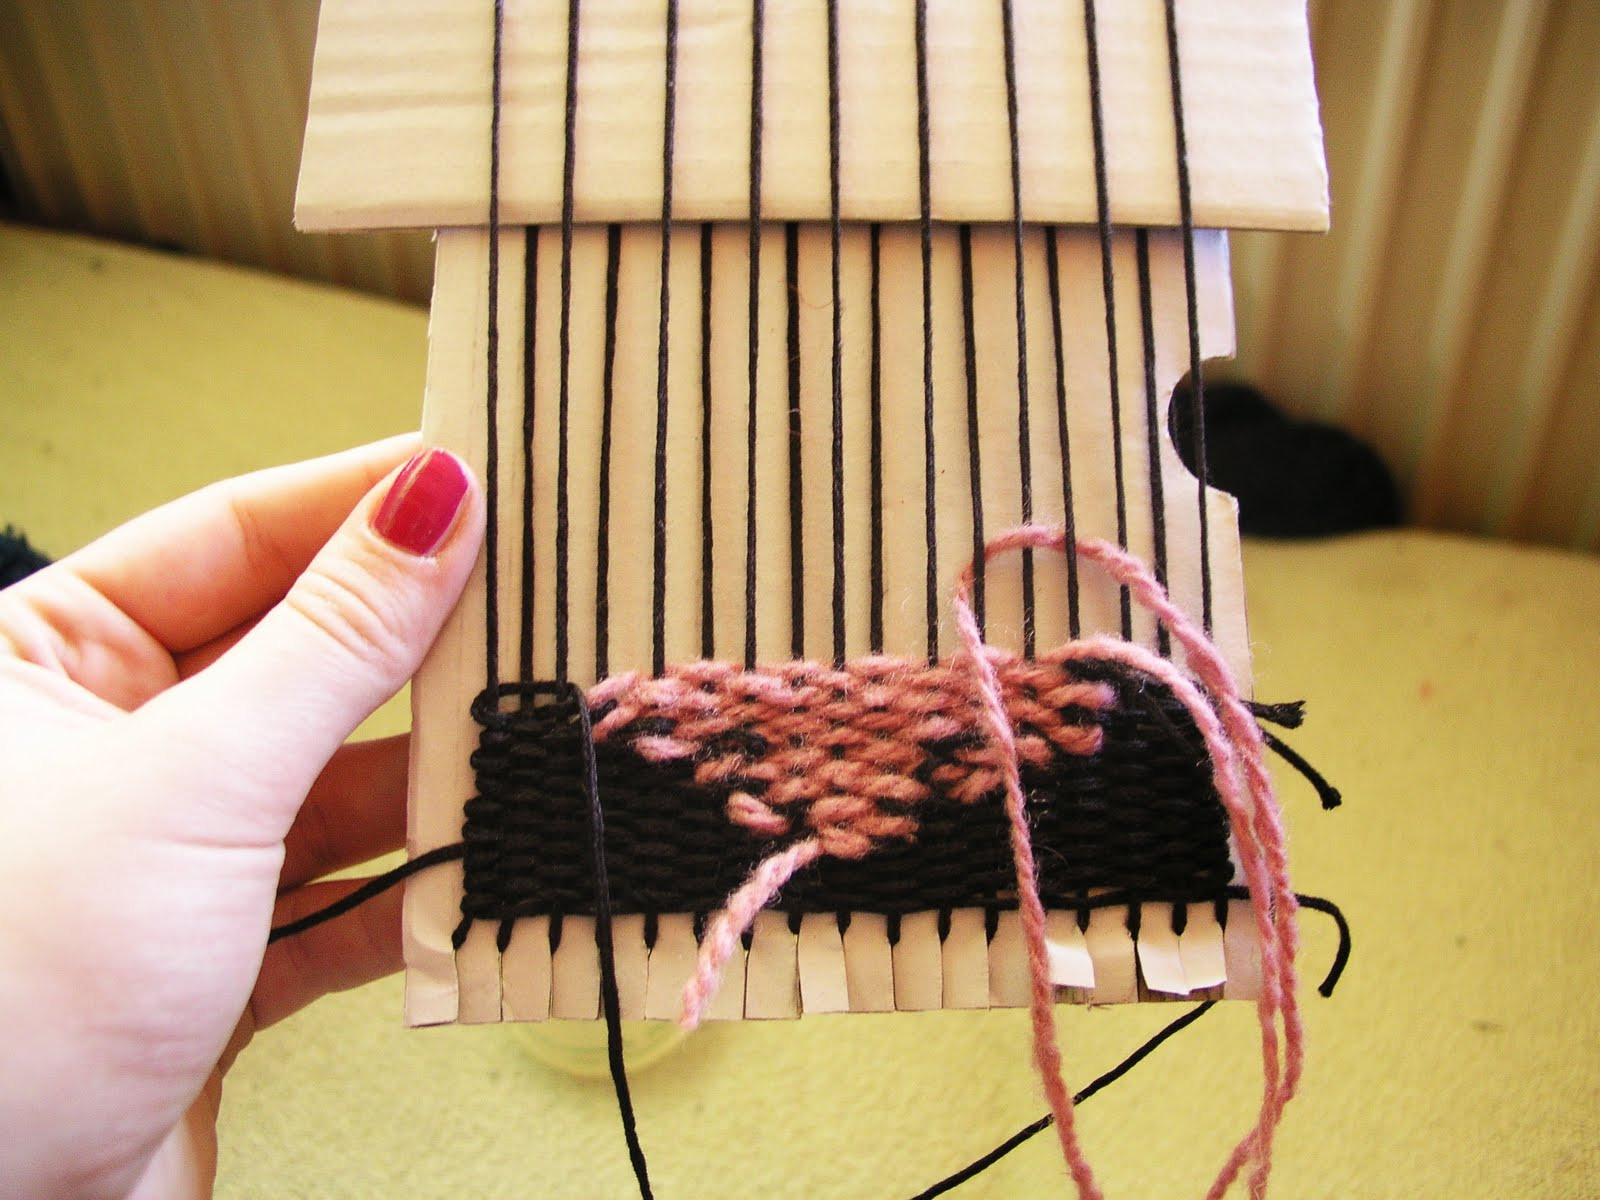 Best ideas about DIY Weaving Loom
. Save or Pin diy weaving tutorial Now.